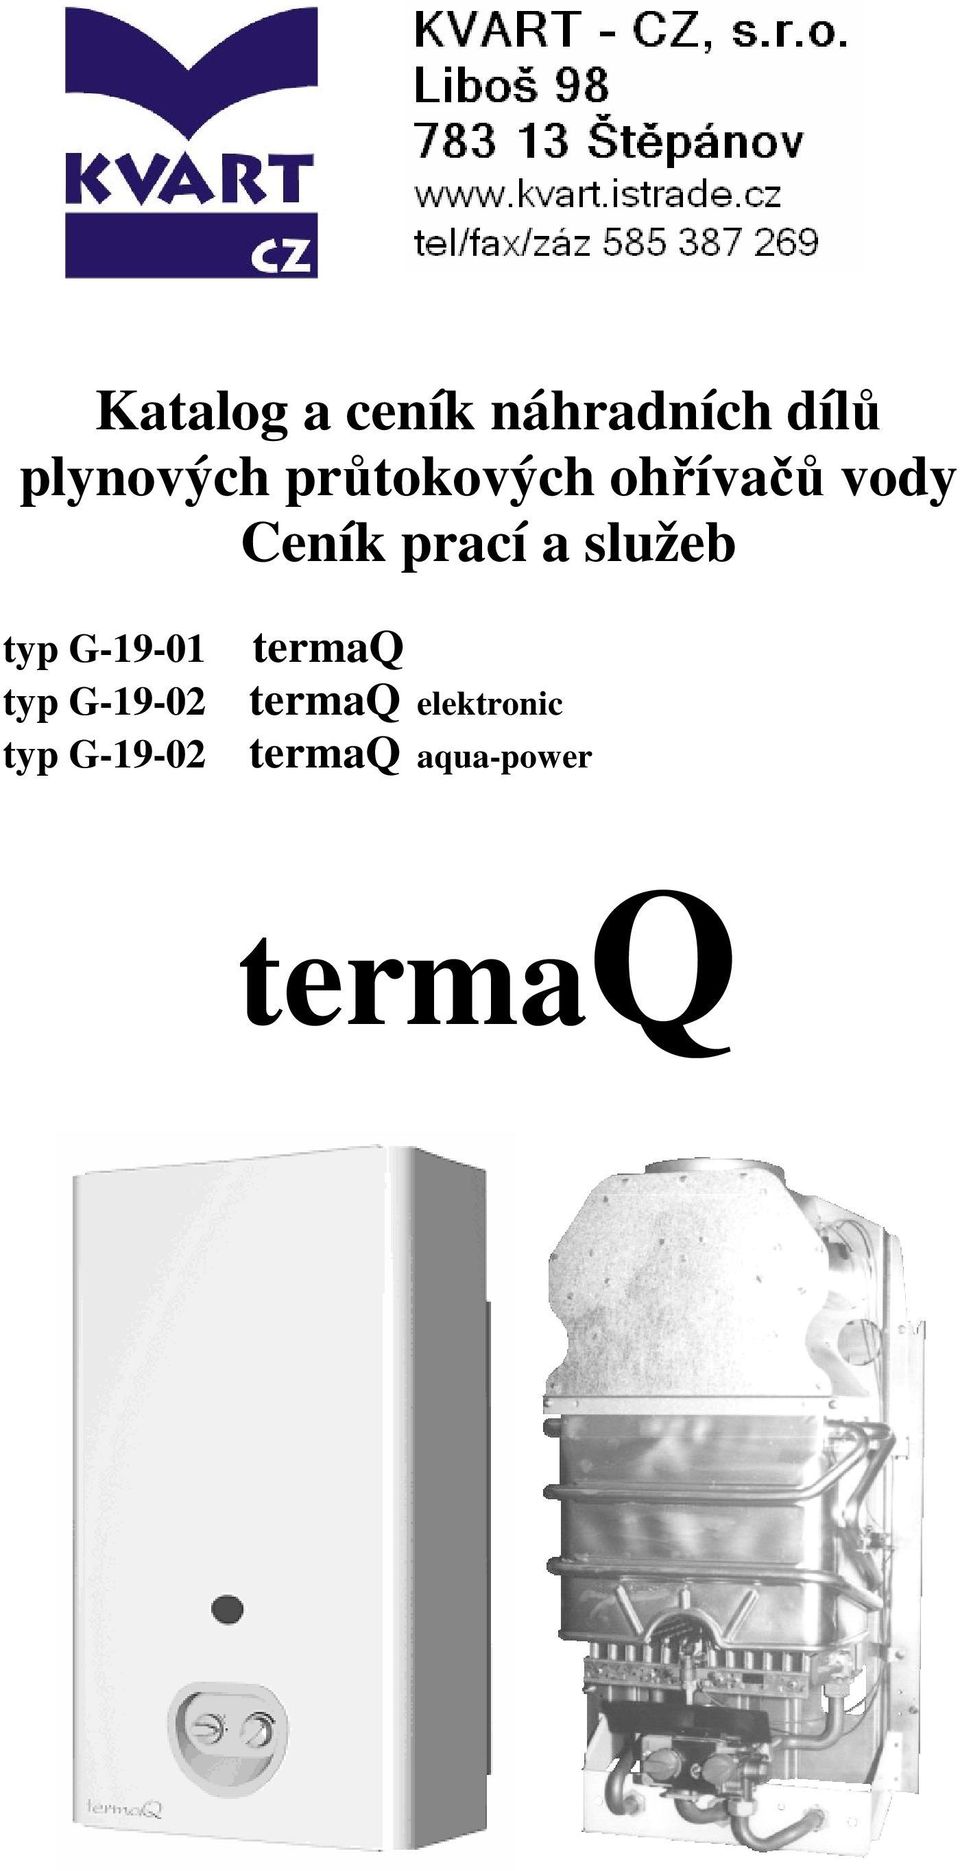 služeb typ G-9-0termaQ typ G-9-02 termaq